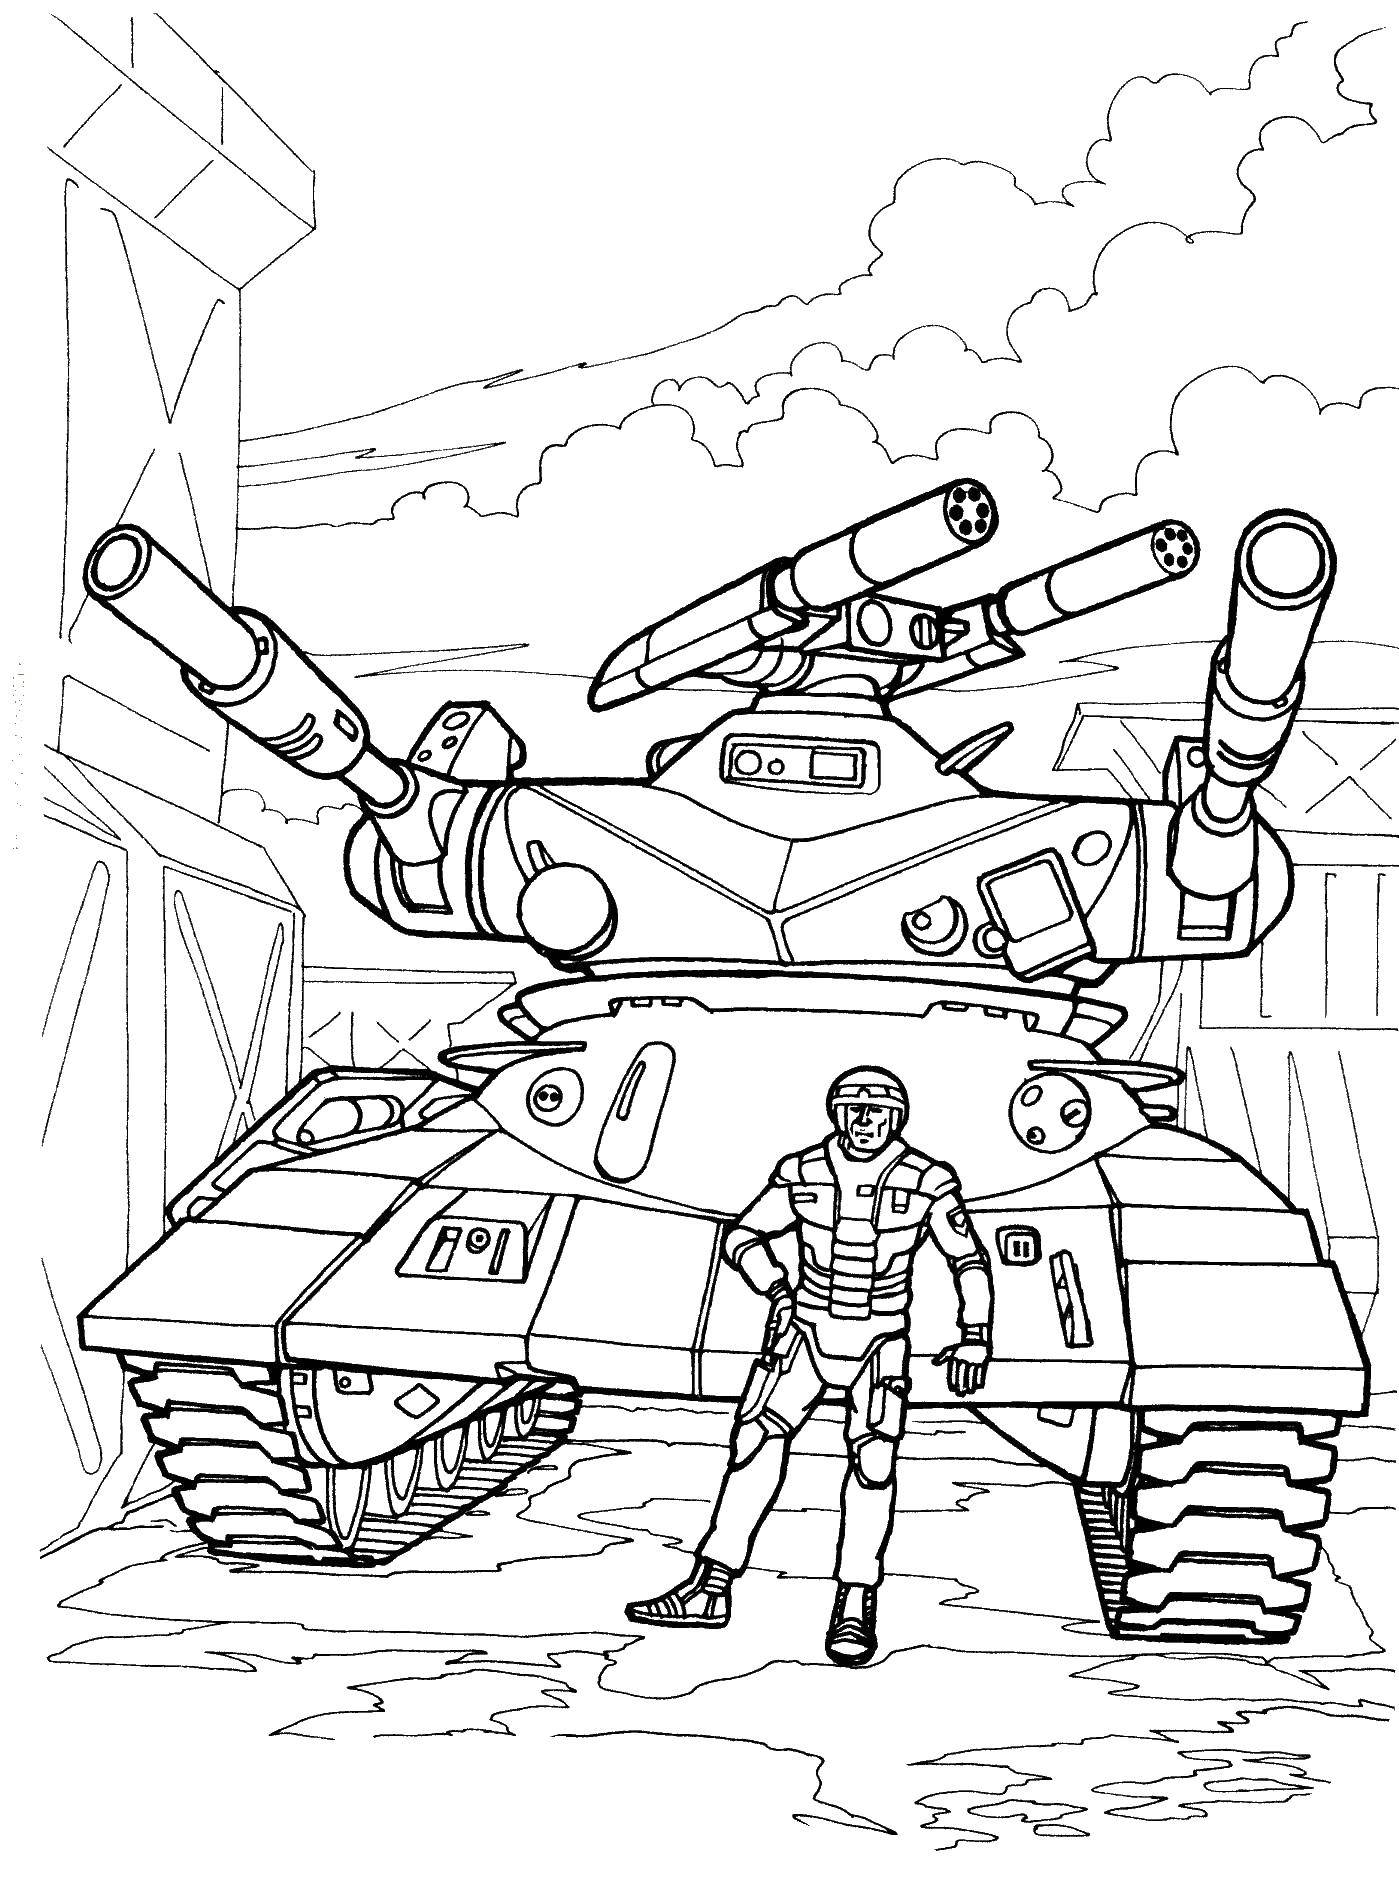 Название: Раскраска Солдат у танка. Категория: военное. Теги: солдат, танк, военное.